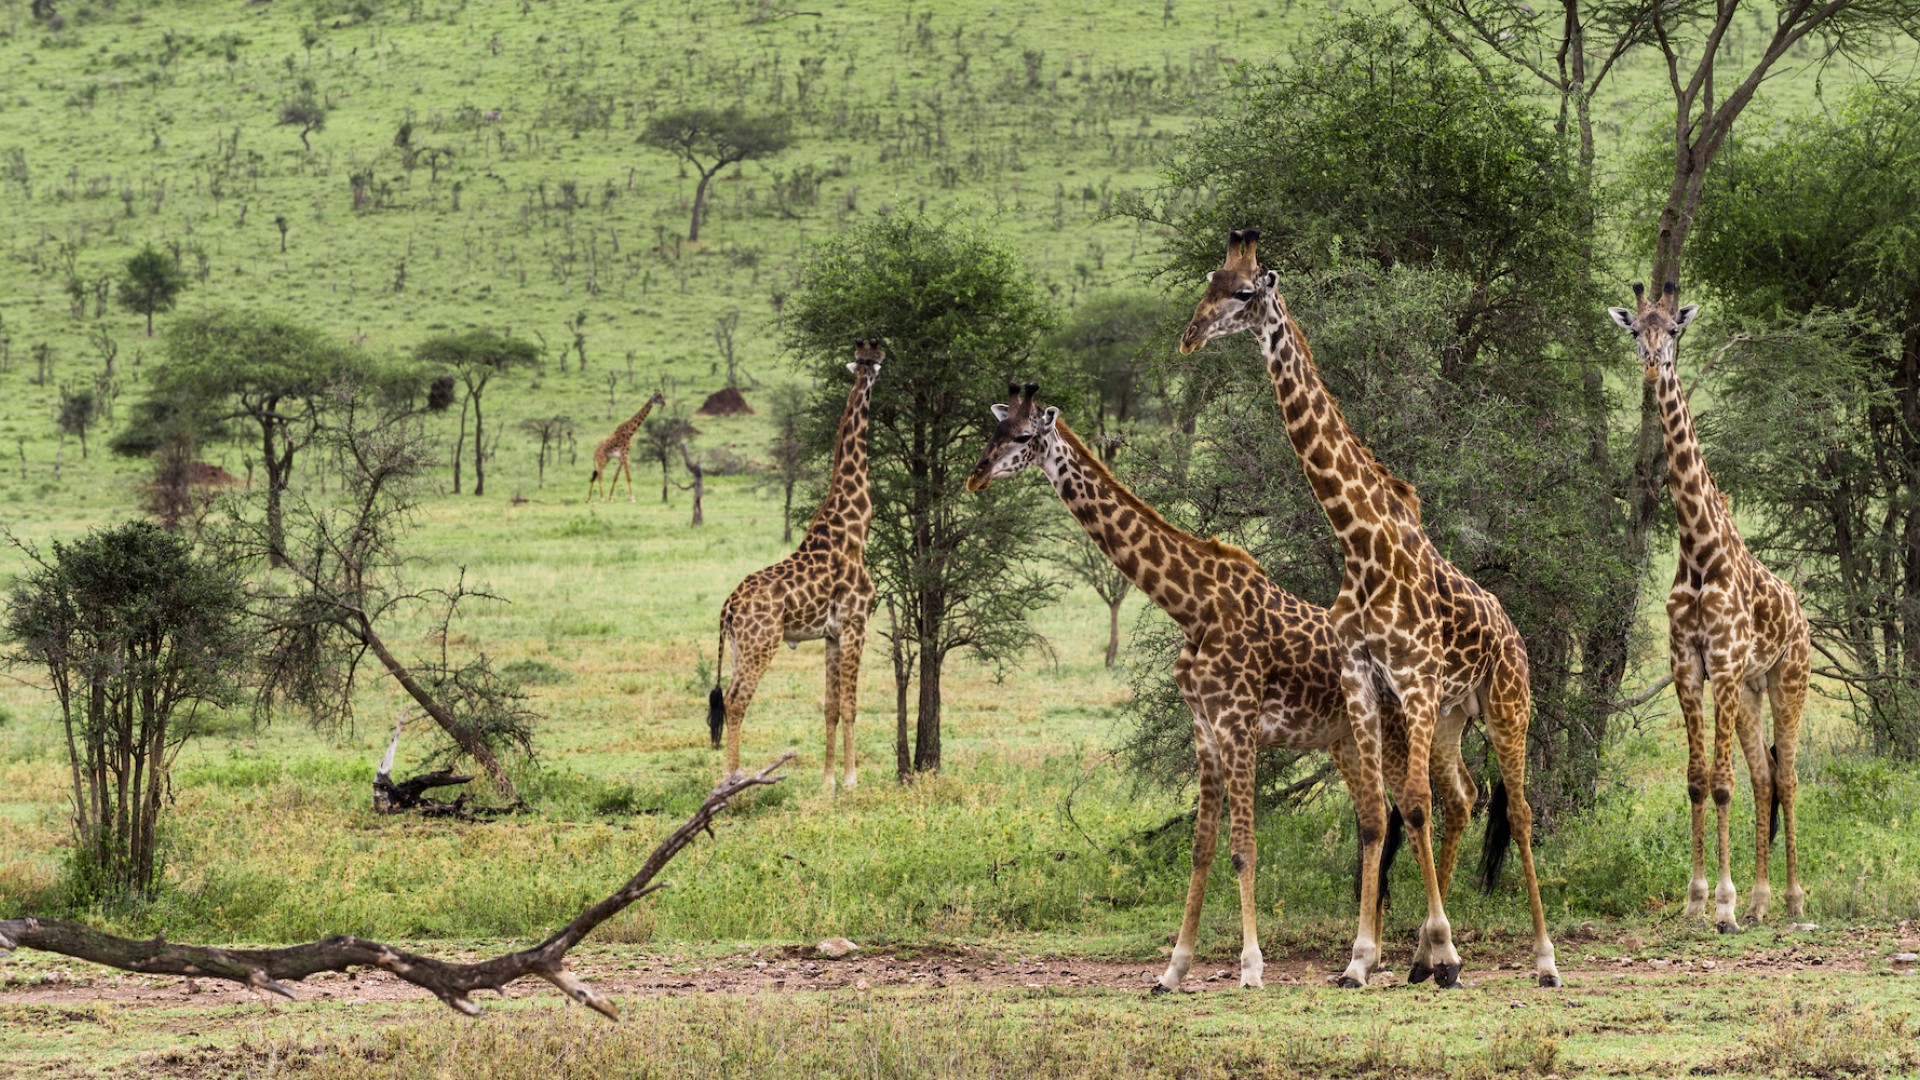 A group of giraffes in a green field as seen from a safari car